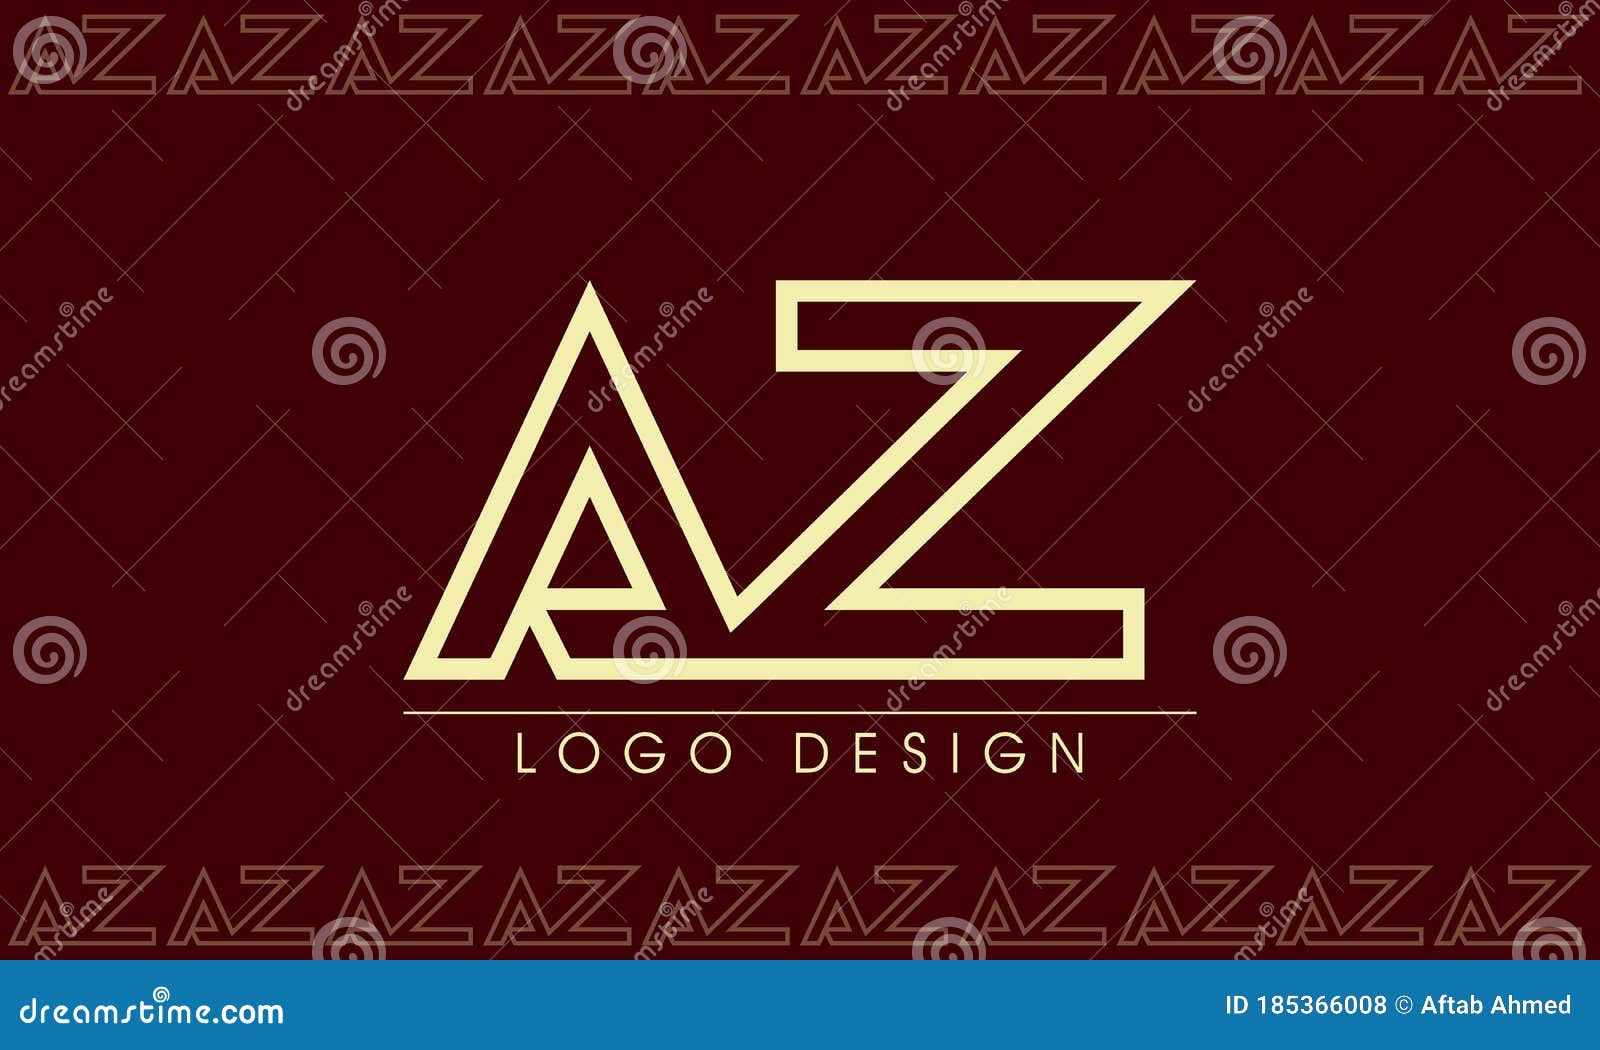 AZ ZA or a Z Letter Logo Design Vector Illustration Stock Illustration ...